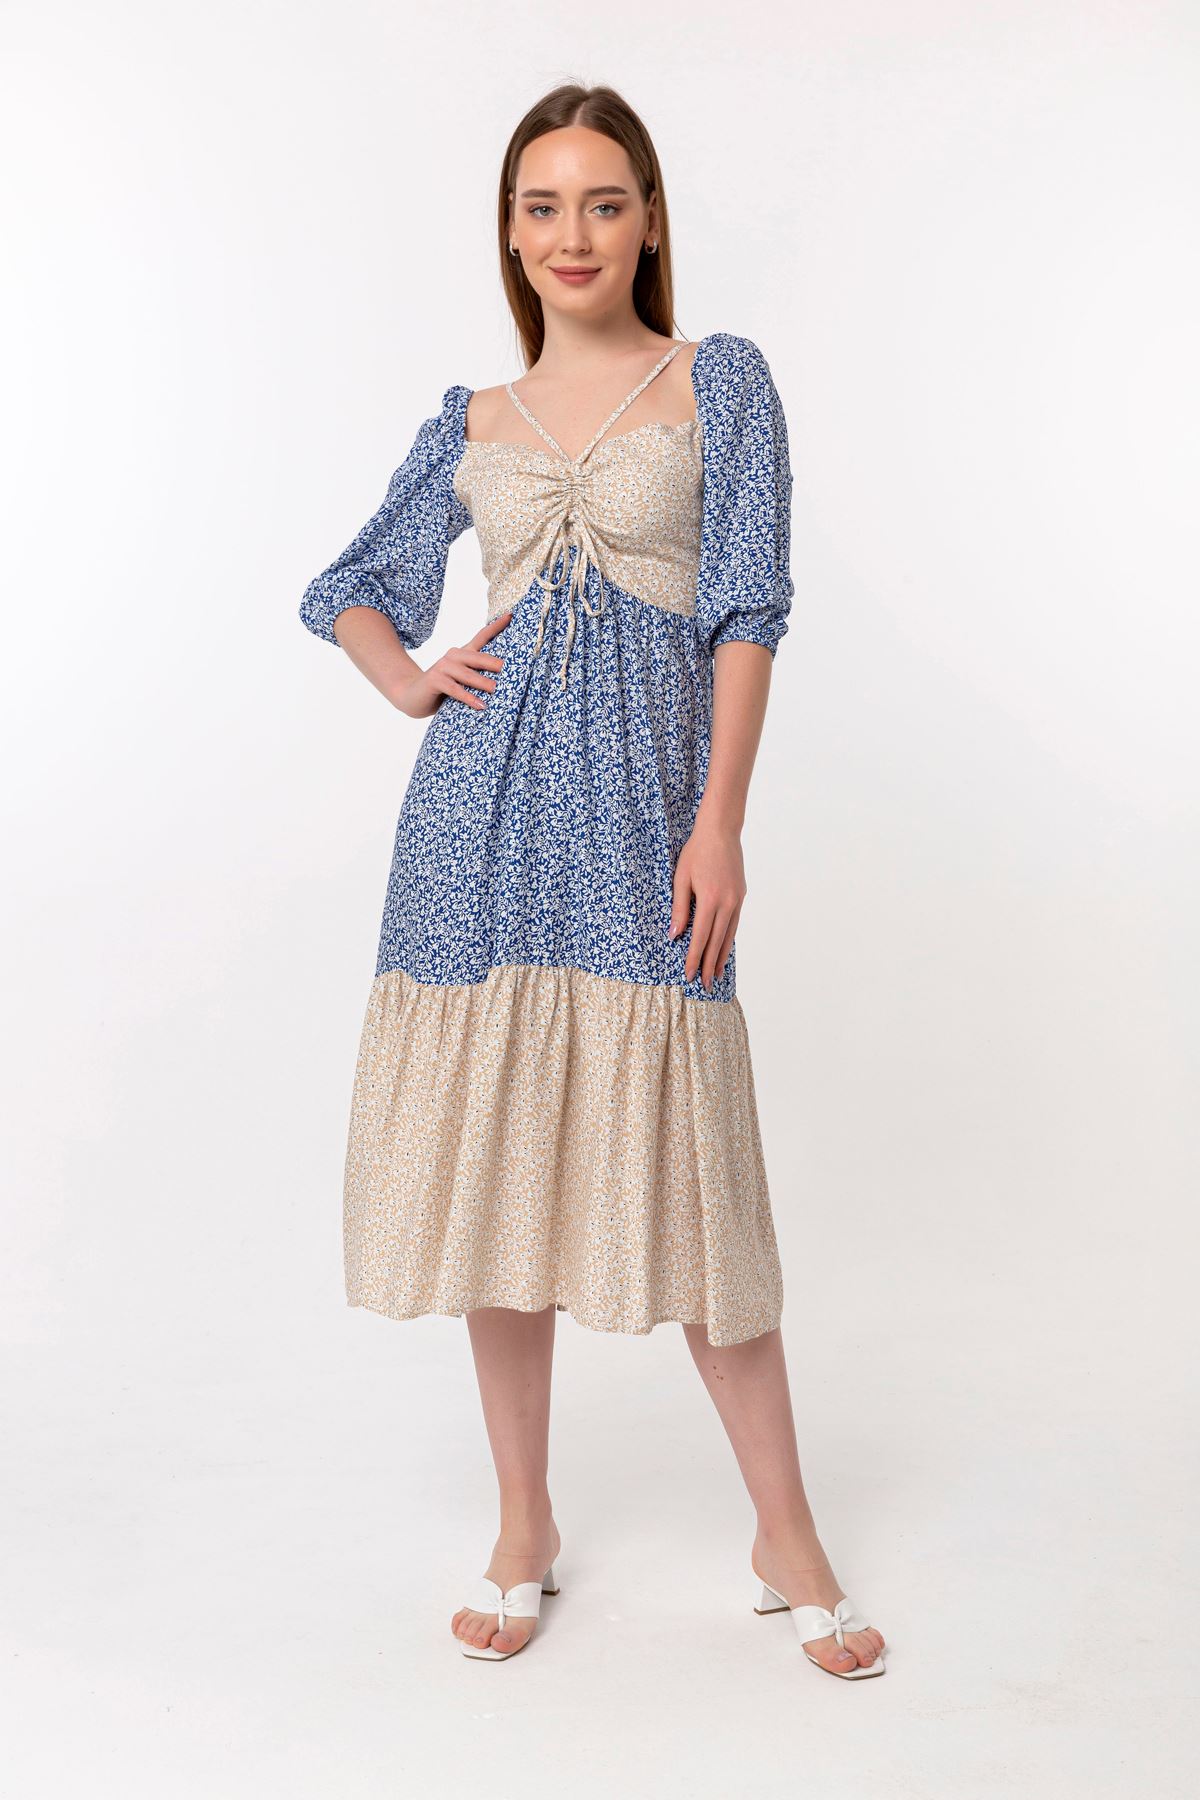 فستان نسائي قماش فيسكون ذراع قصير طوق الربط ميدي قالب مريح نمط زهرة - ازرق شامي 